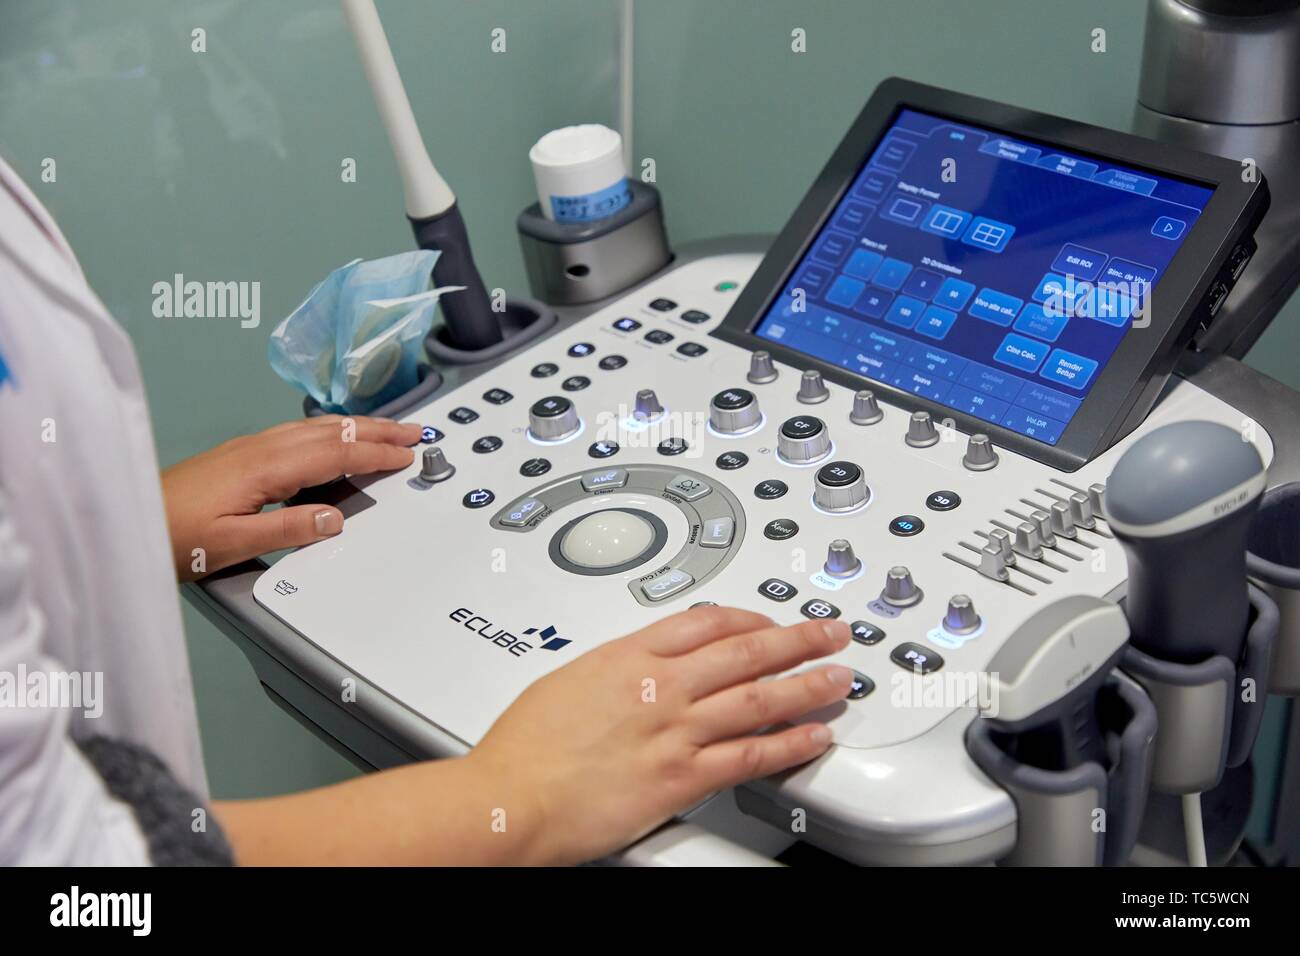 ultrasound diagnostic systems, Ultrasound 4d, Hospital, Donostia, San Sebastian, Gipuzkoa, Basque Country, Spain Stock Photo